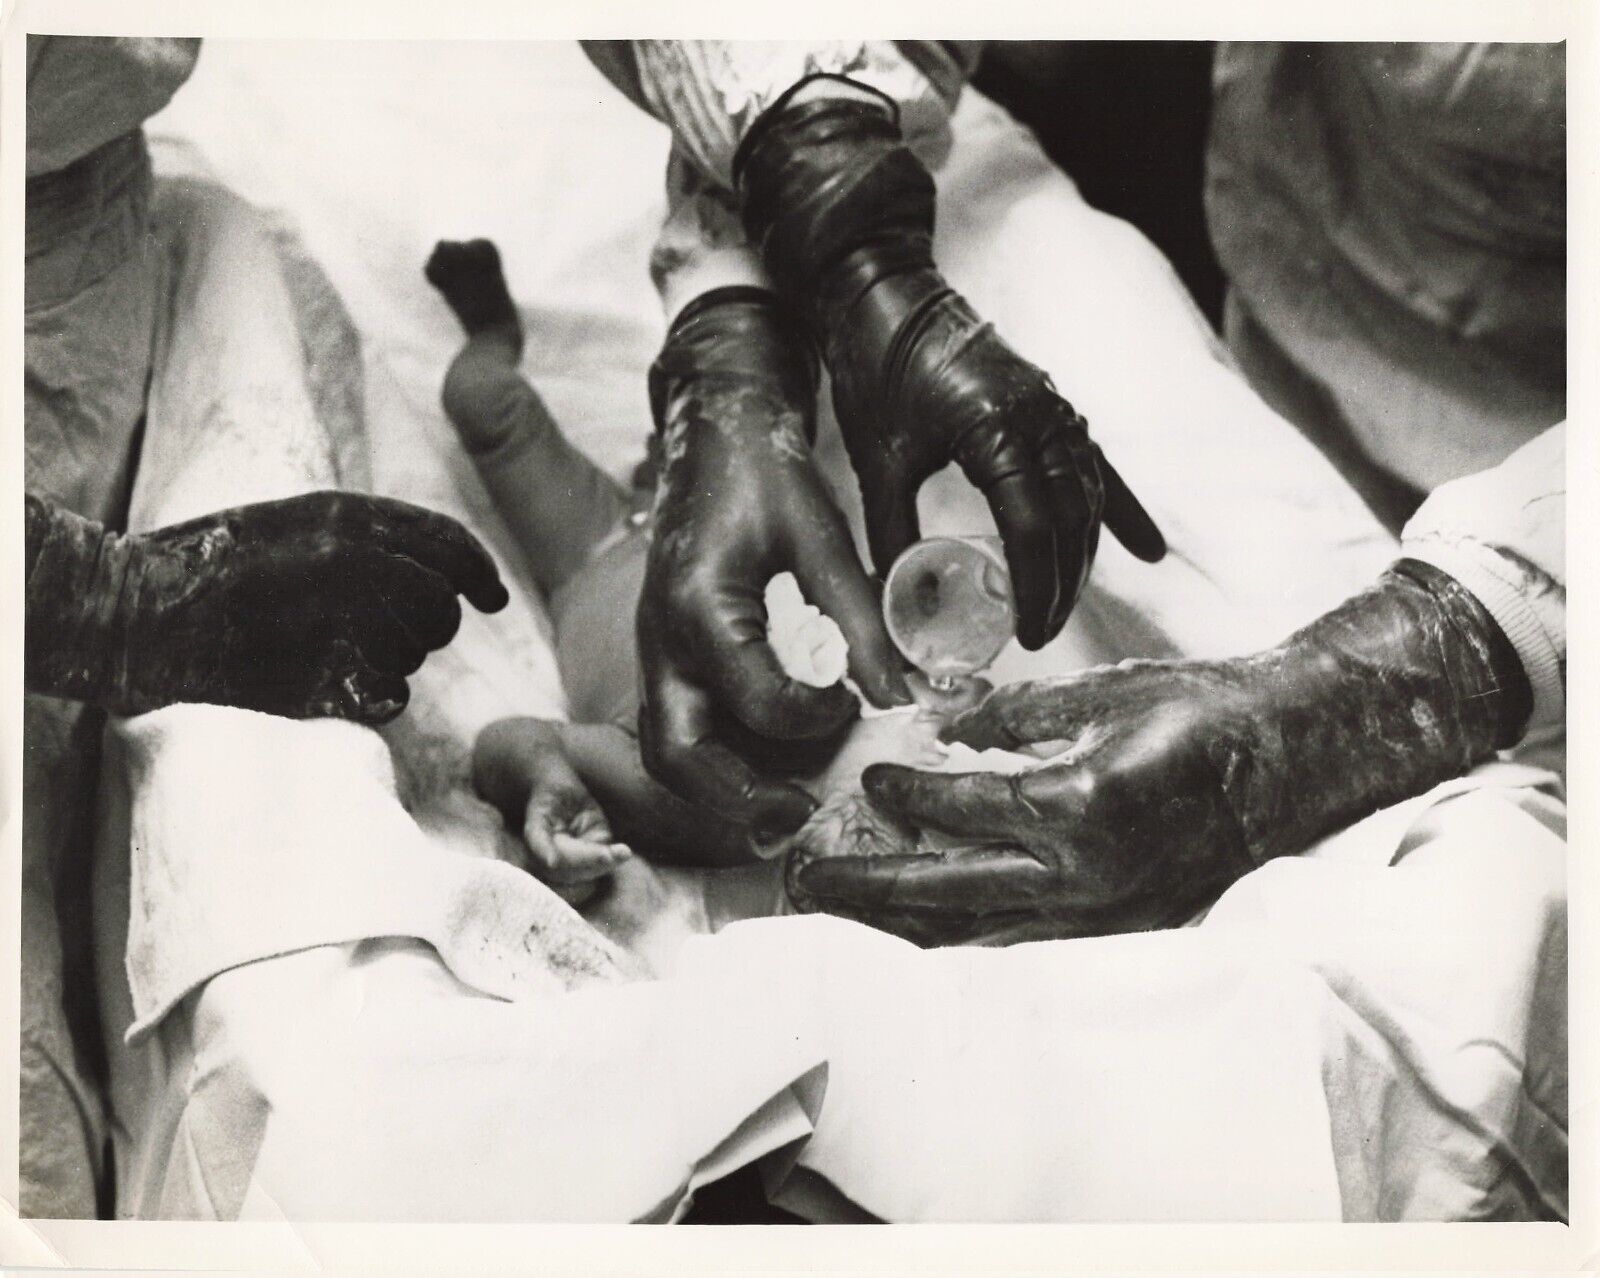 US Newborn Birth 1954 Press Photo Penicillin News Story Science Health  *P67b